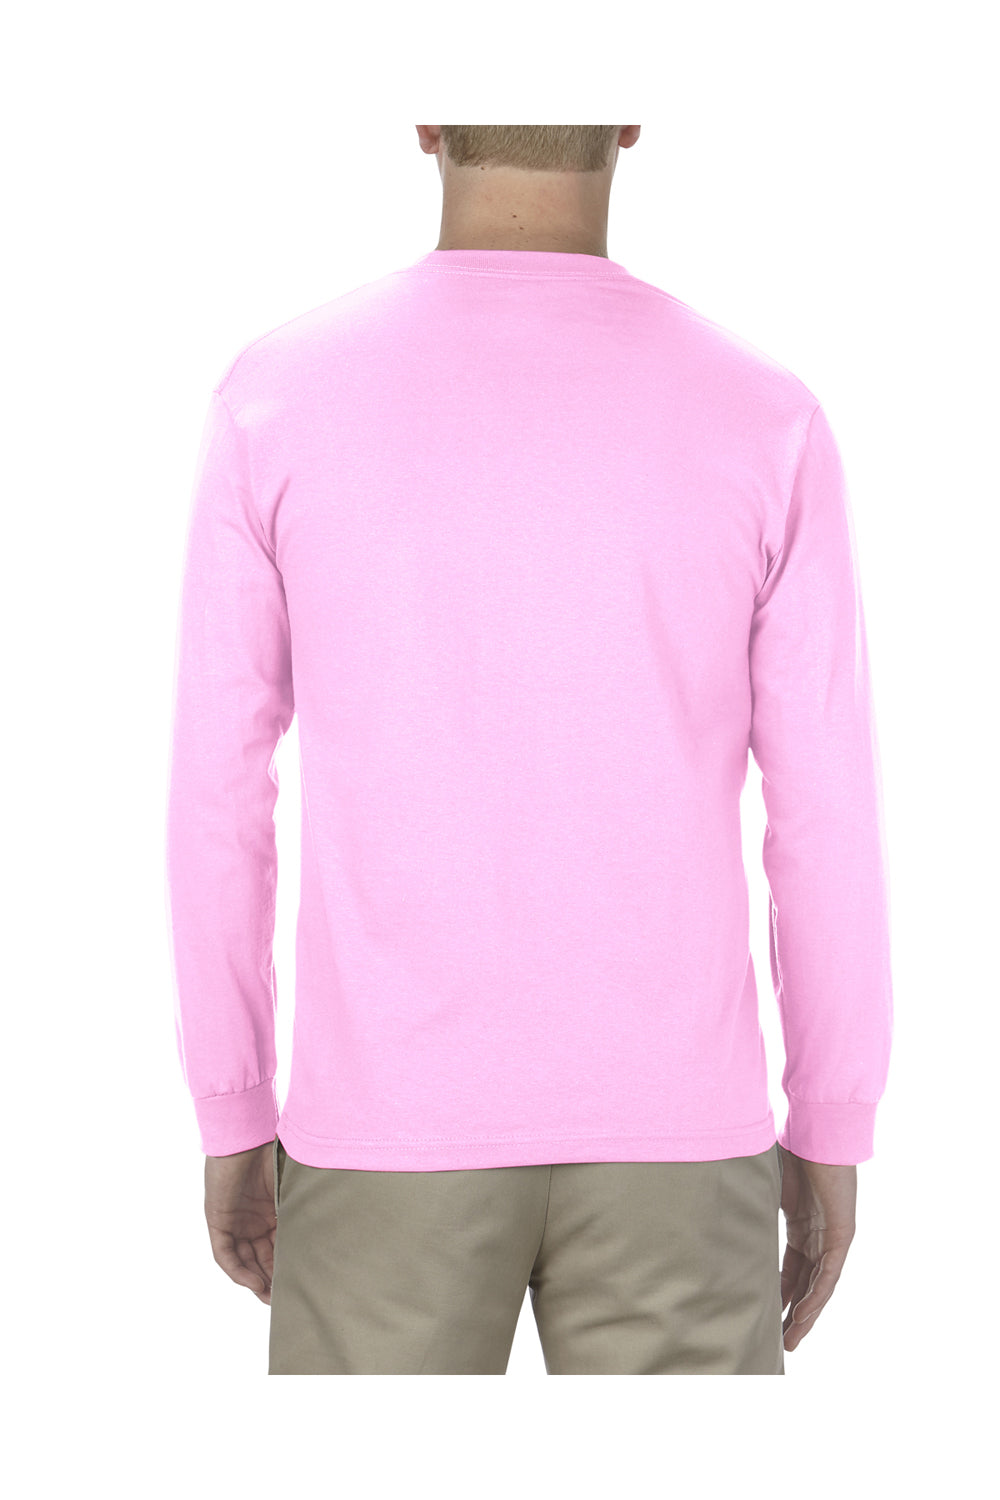 Alstyle AL1304 Mens Long Sleeve Crewneck T-Shirt Pink Back